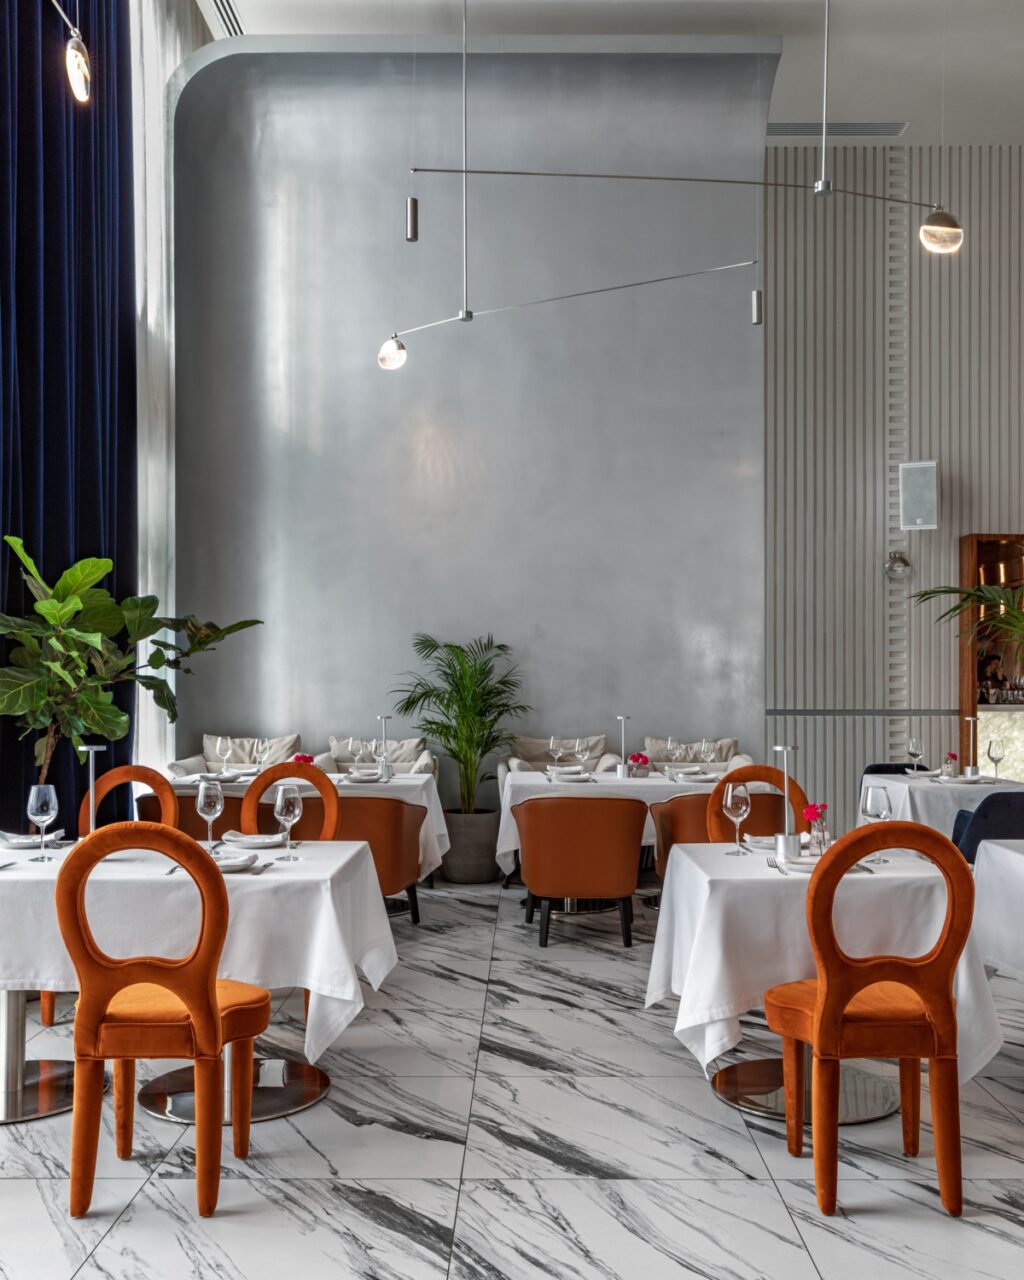 Restoran BENUAR keanggunan Art Deco dengan sentuhan Pop Art yang berkilauan